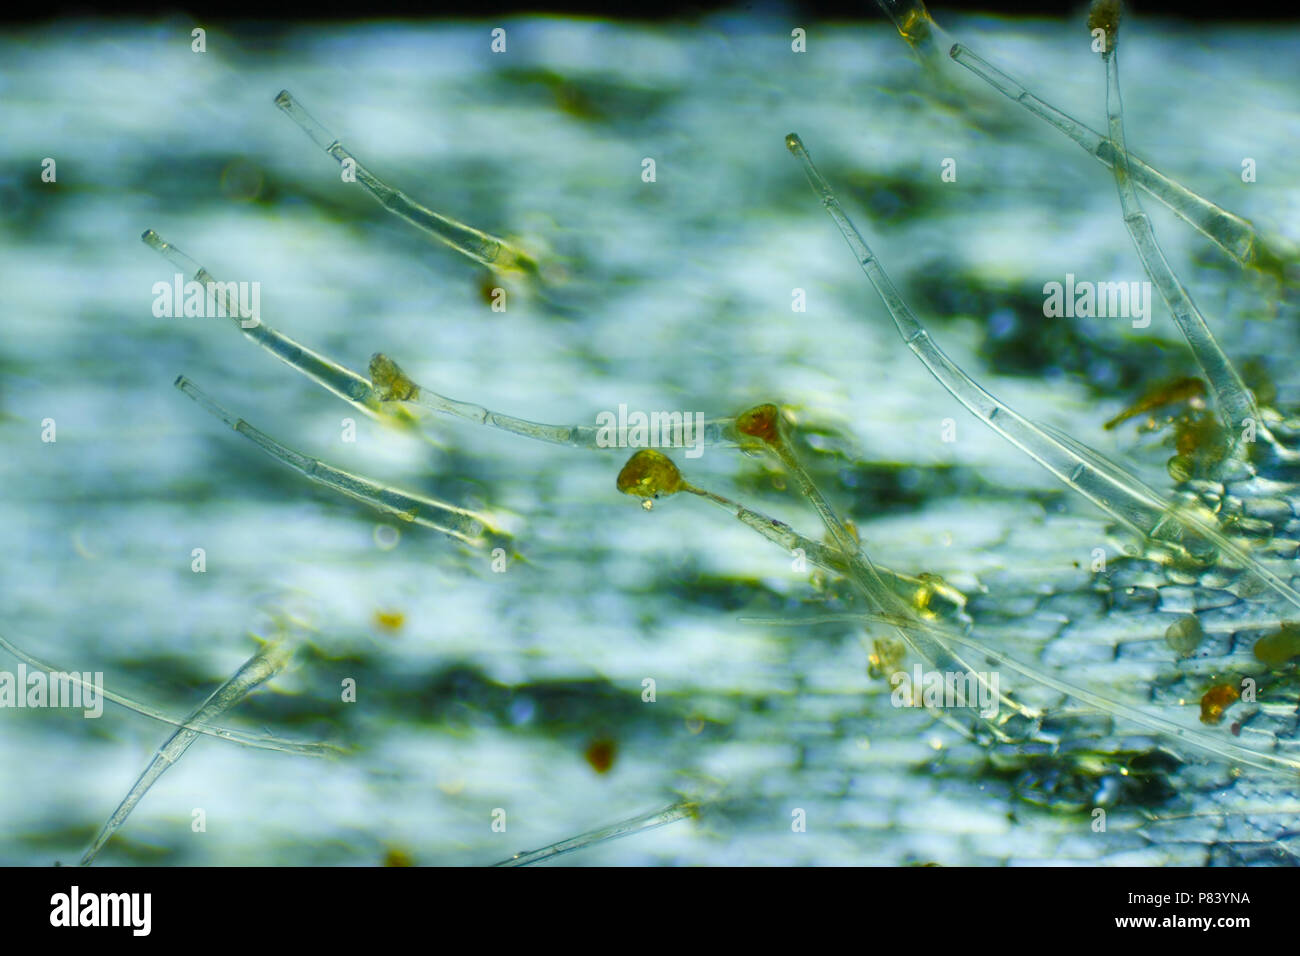 Microscopic view of Garden geranium (Pelargonium x hortorum) trichomes (hairs). Polarized light, crossed polarizers. Stock Photo